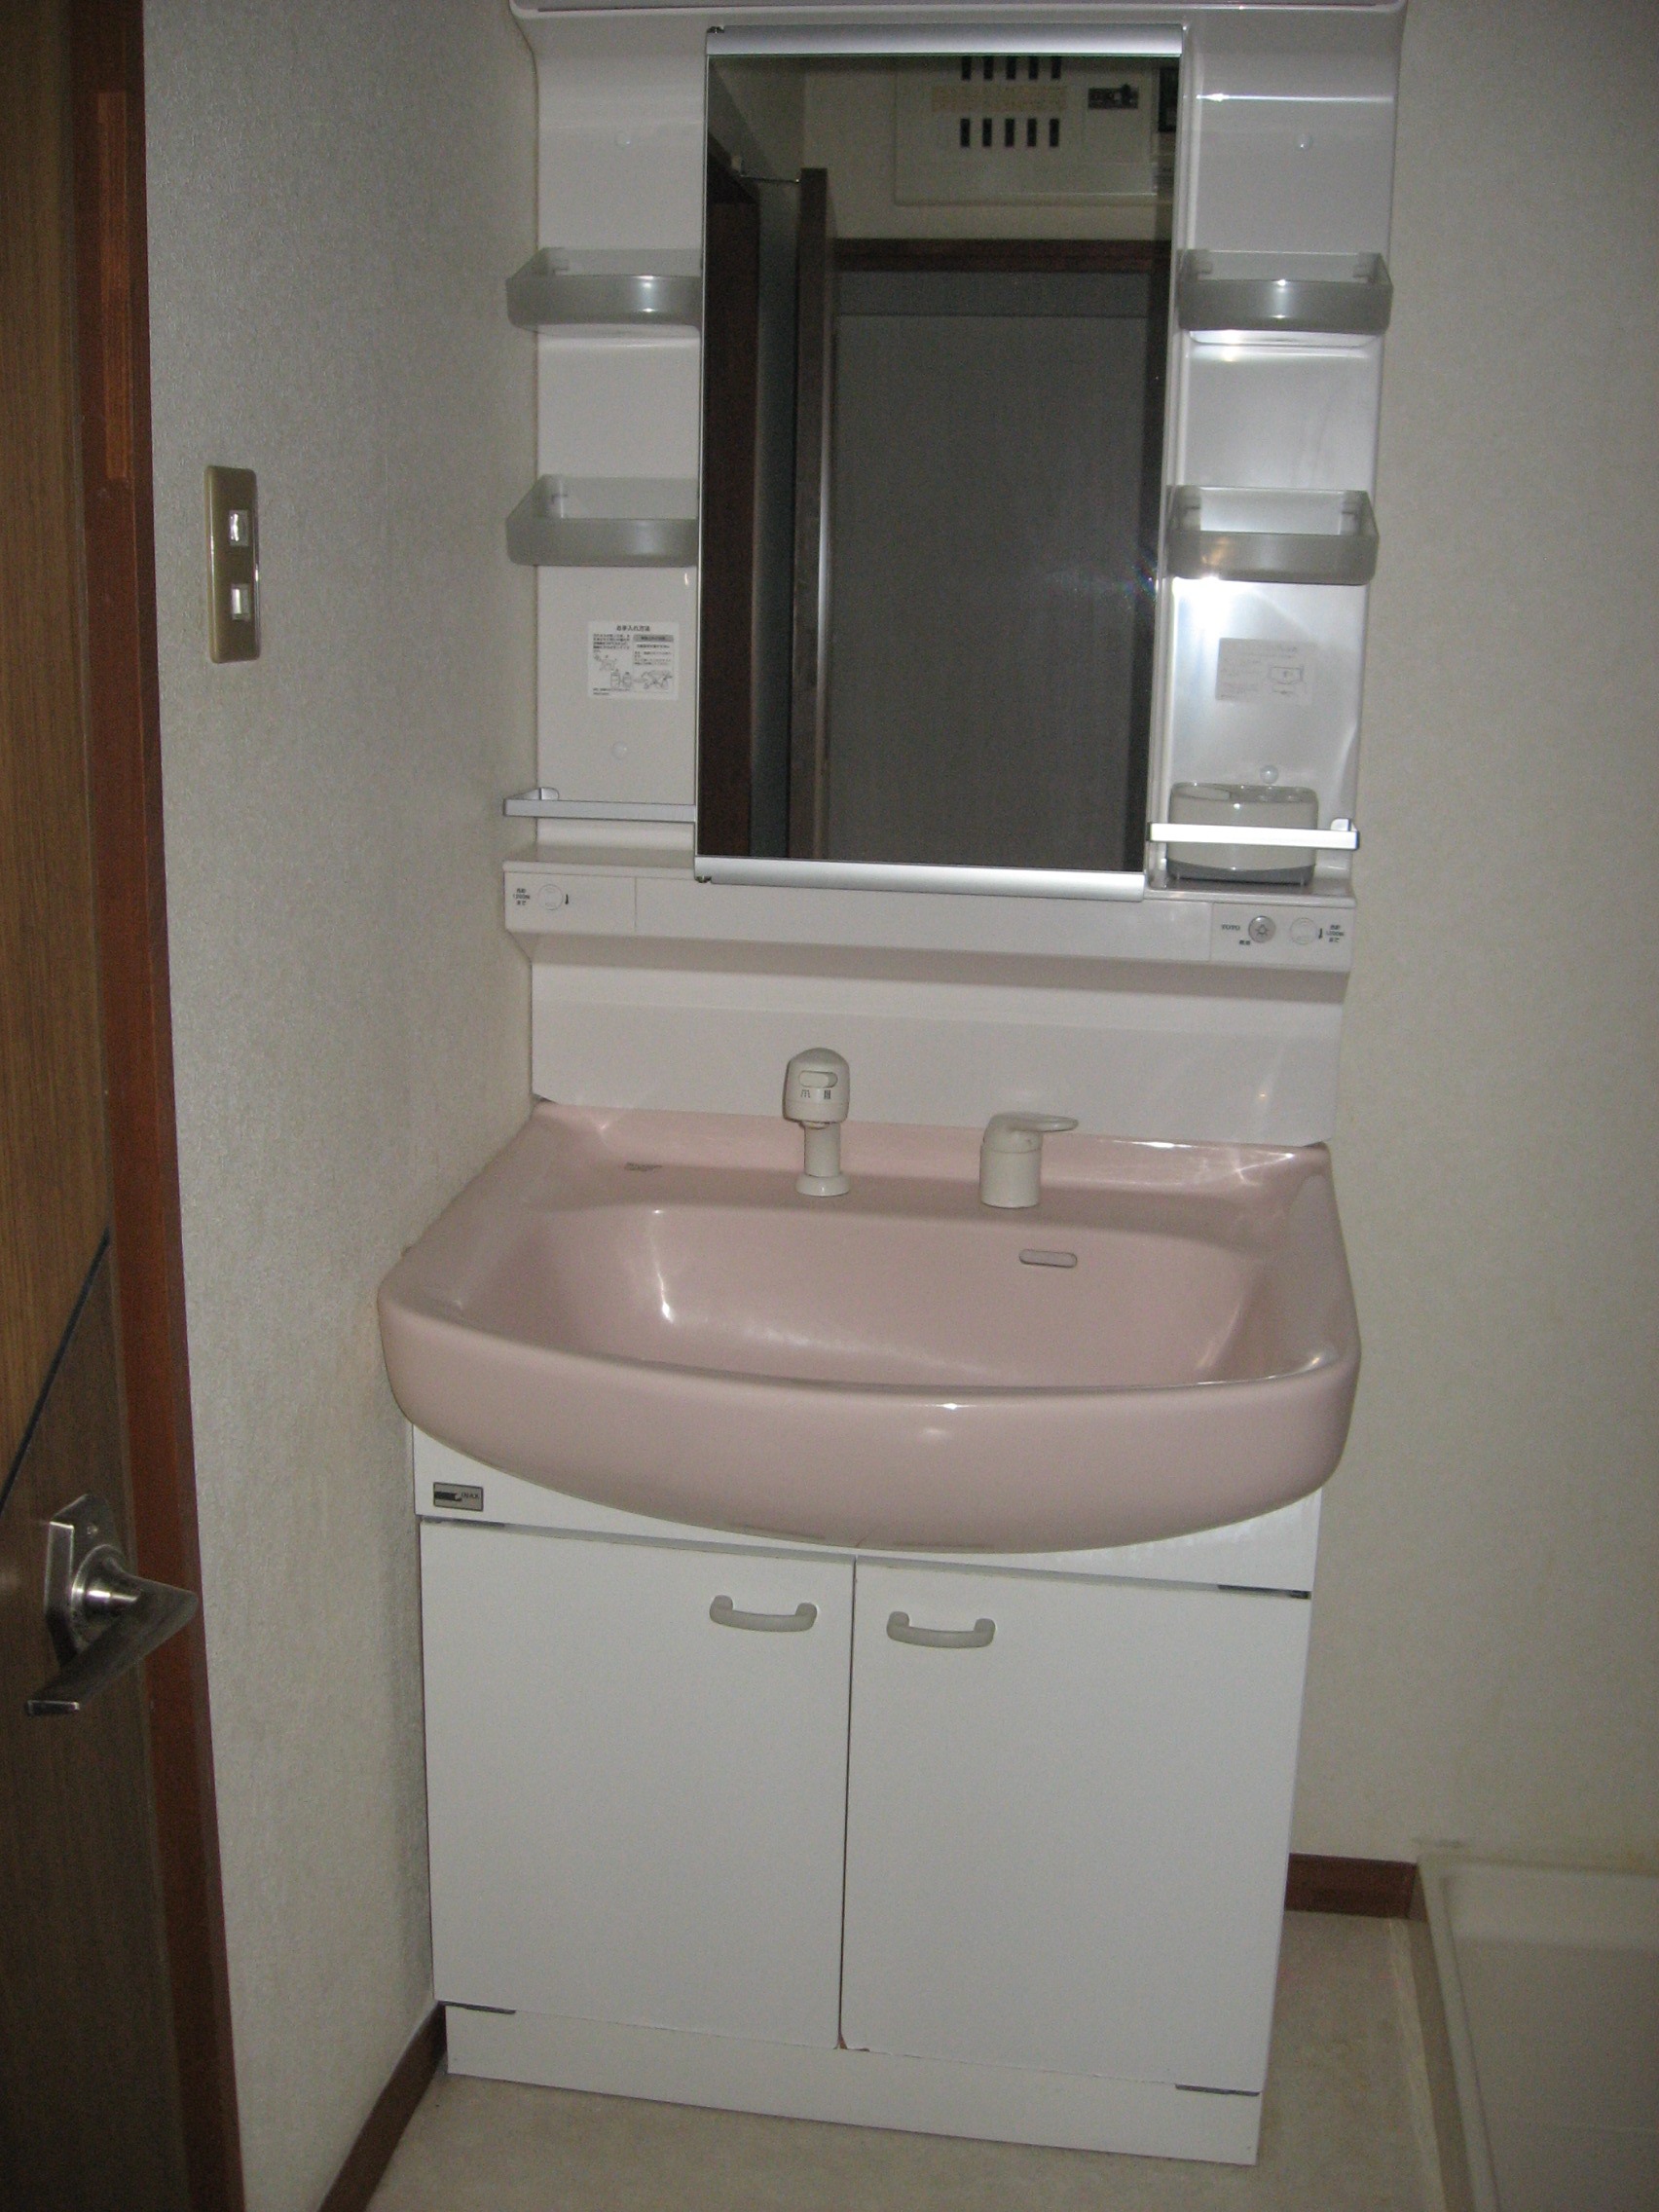 Washroom. Hot water supply